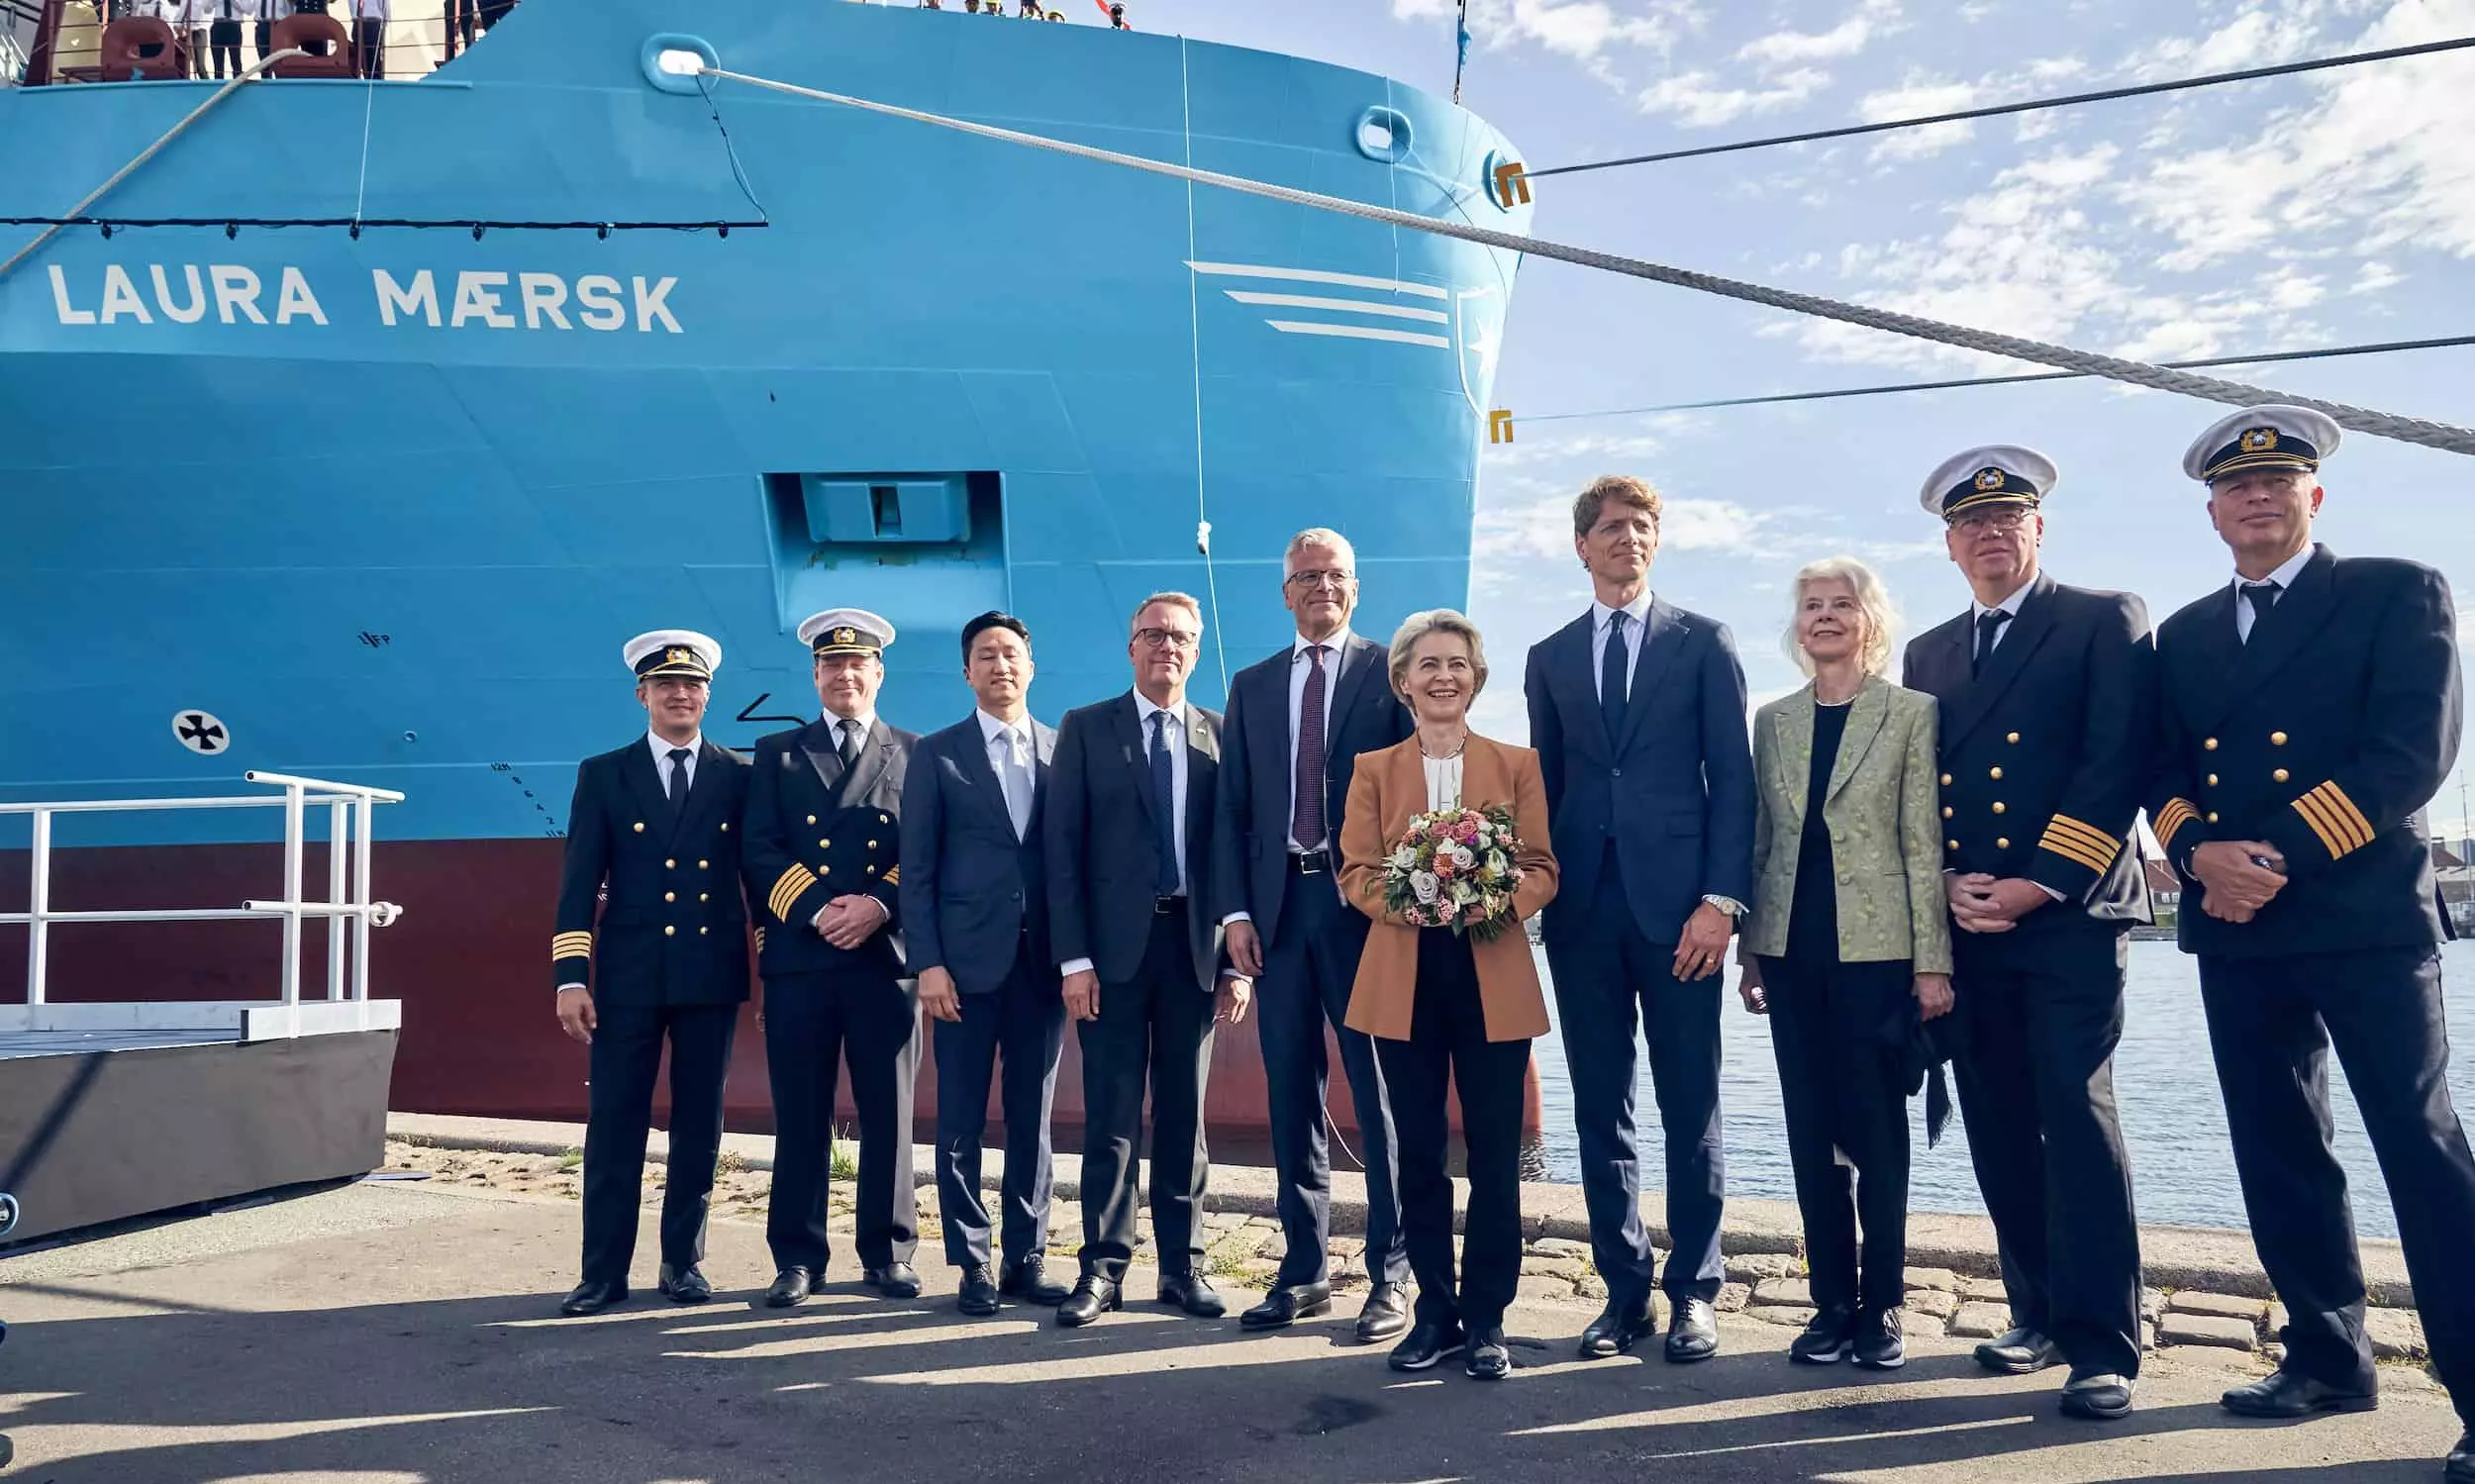 Laura Maersk - EU Commission President names landmark methanol vessel